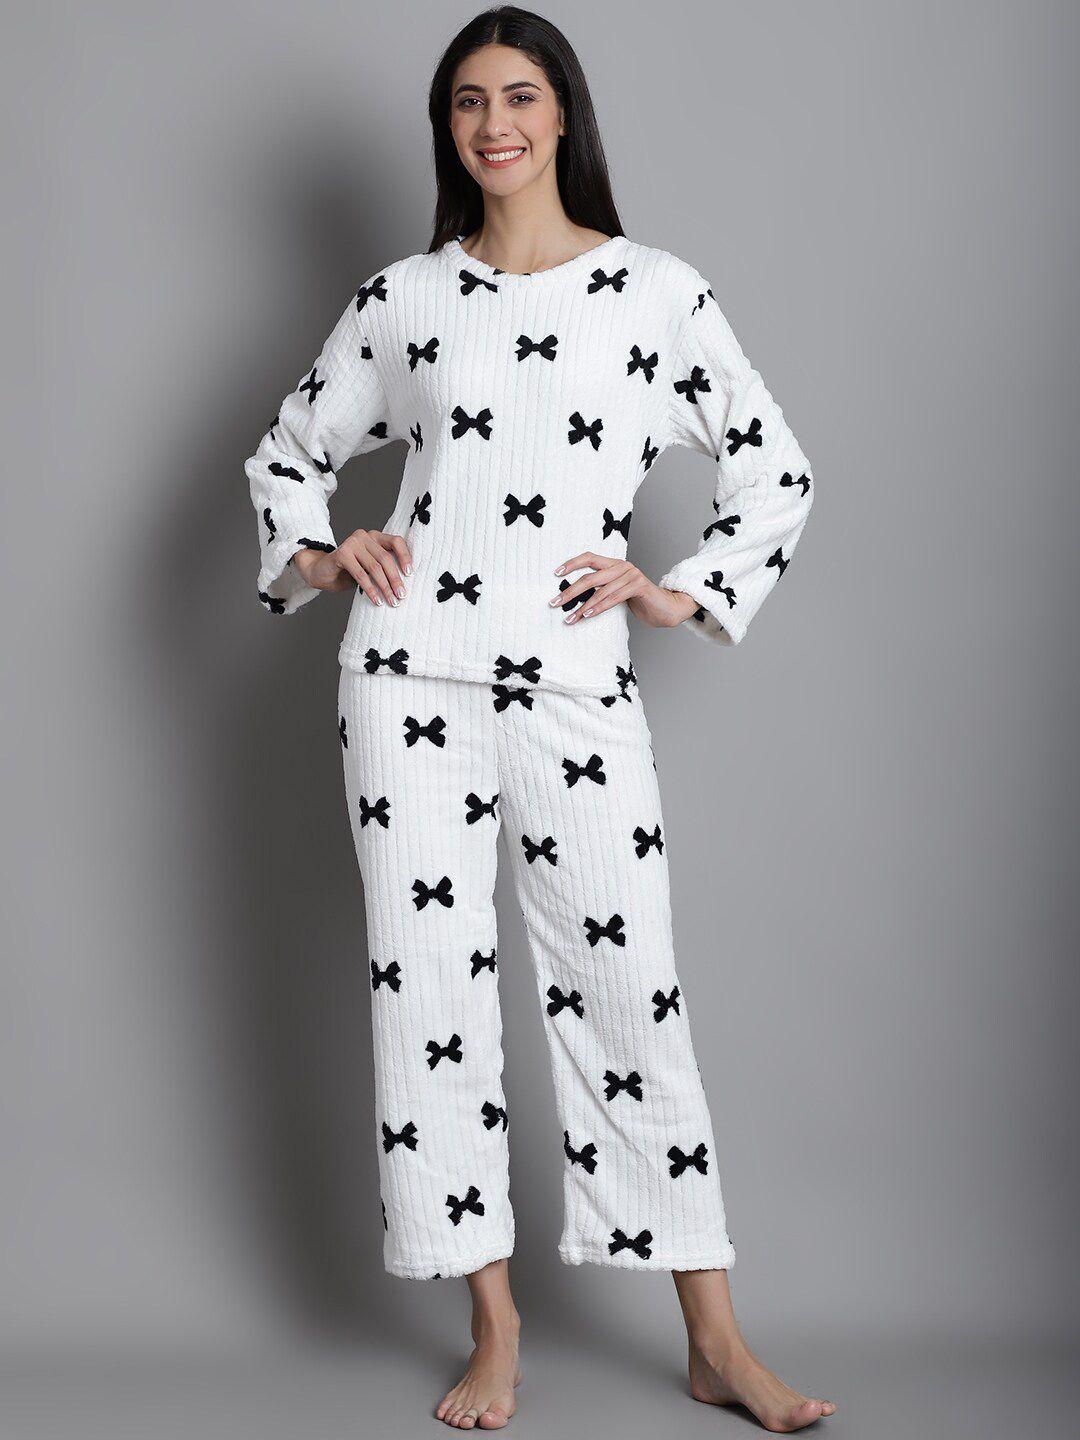 jinfo printed fleece top and pyjamas night suit